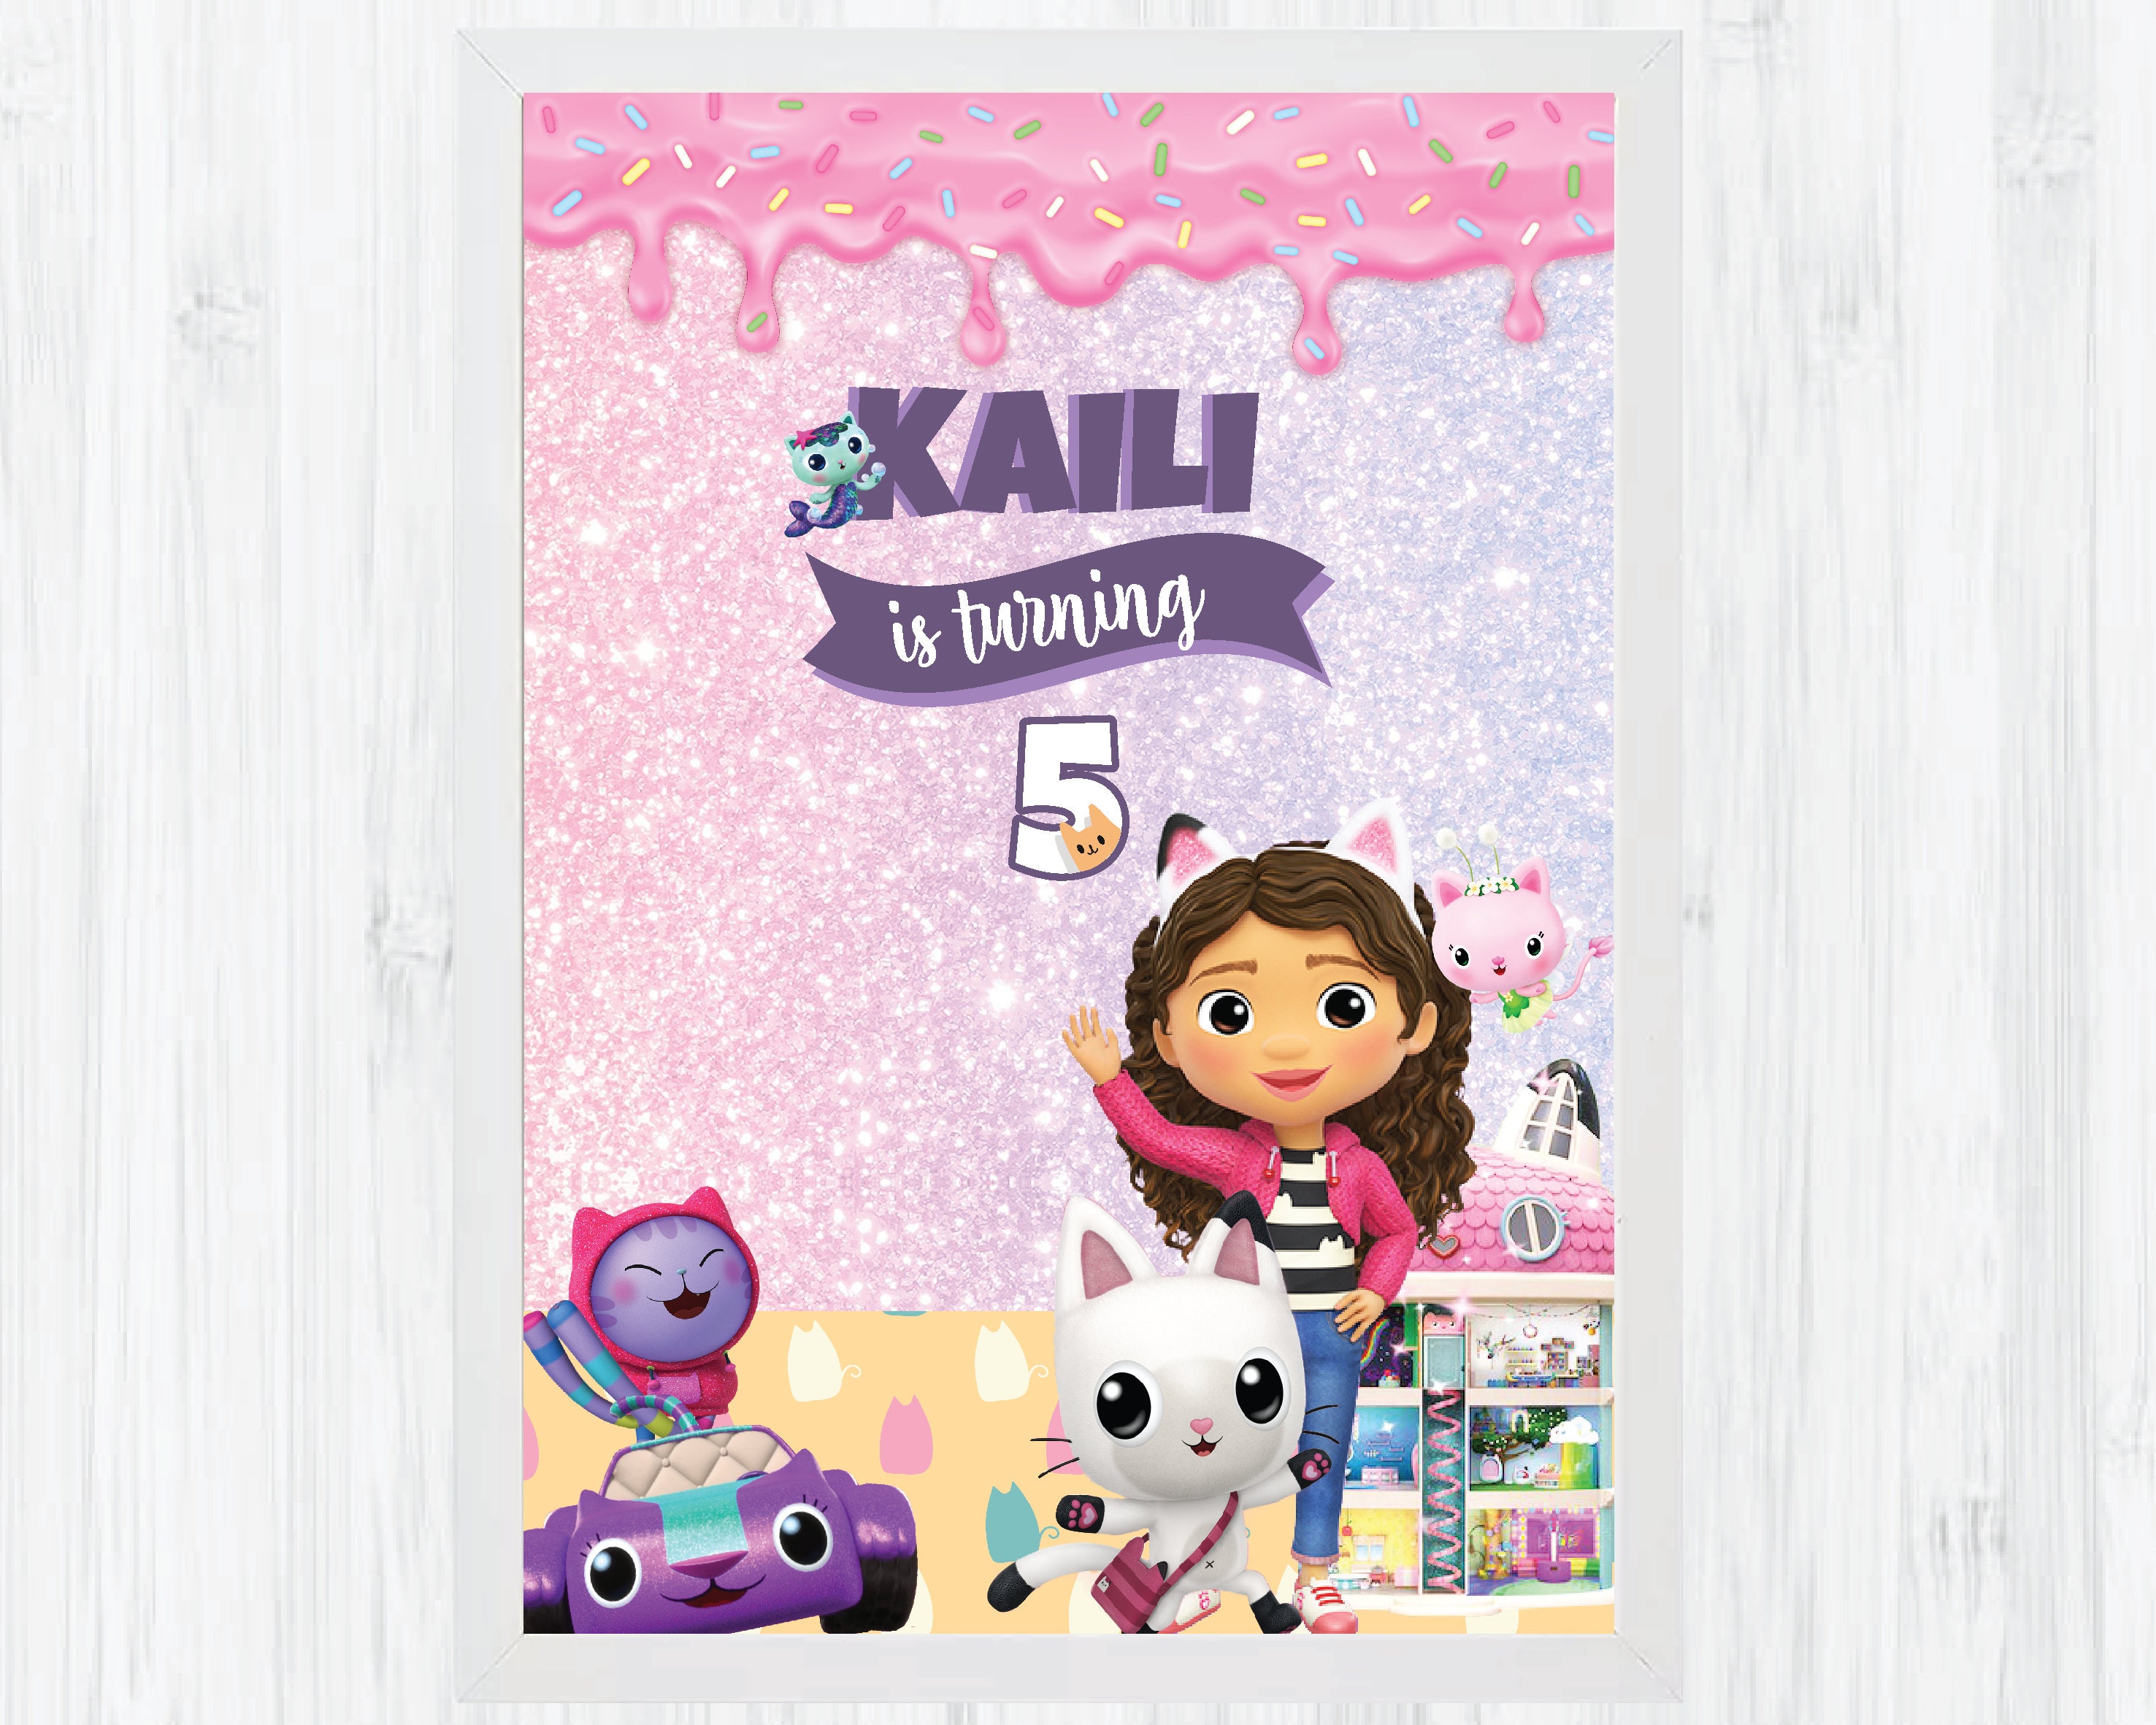 Instant Download Gabby Dollhouse BANNER HAPPY BIRTHDAY, Digital Pancarta  Feliz Cumpleaños Gabby La Casa De Muñecas 